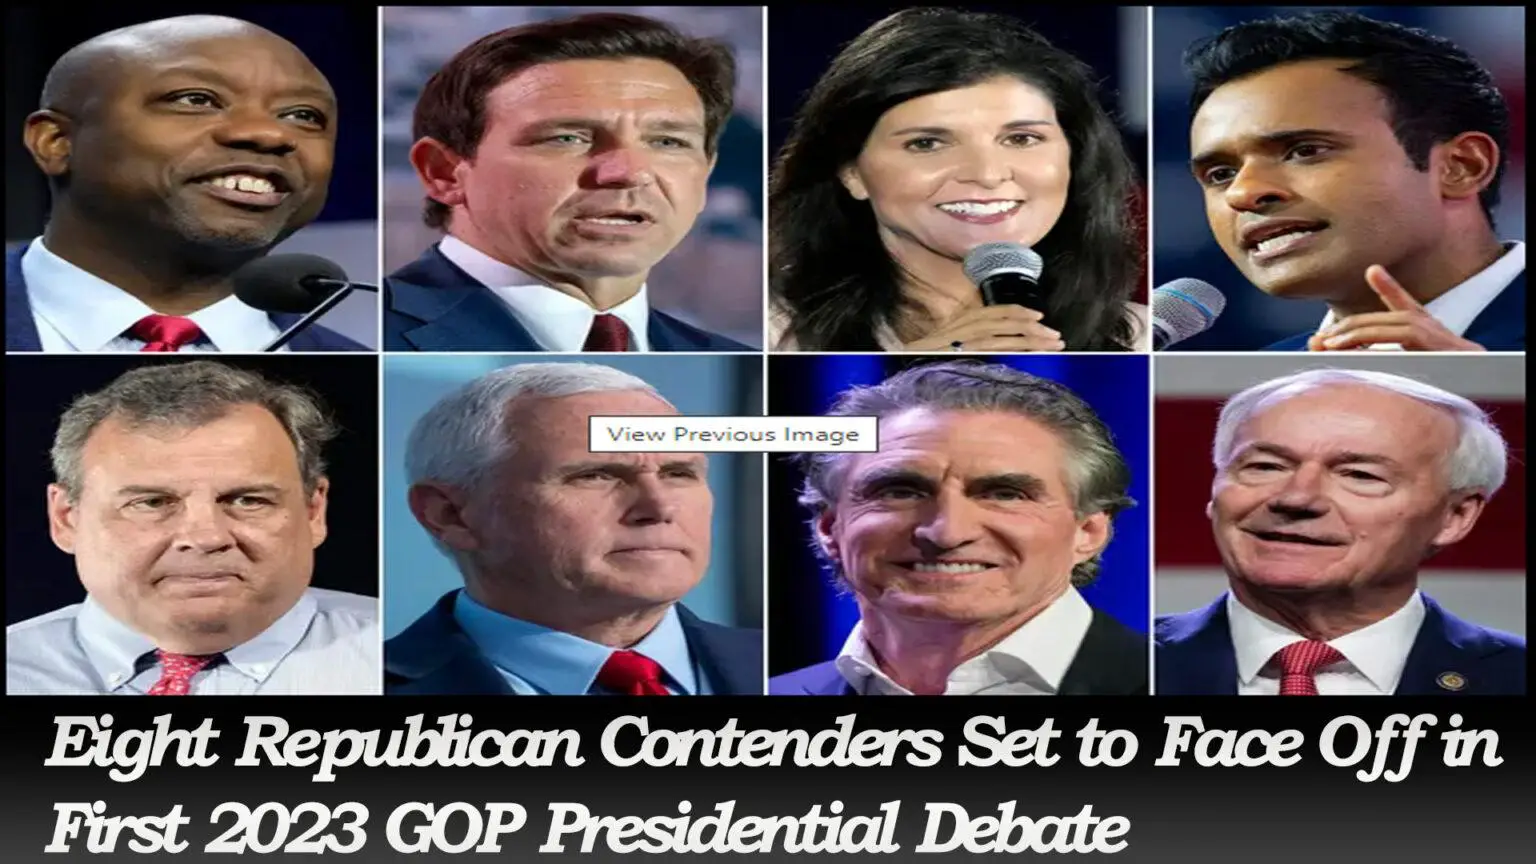 2023 GOP Presidential Debate: High-Stakes Showdown Among Eight Republican Contenders